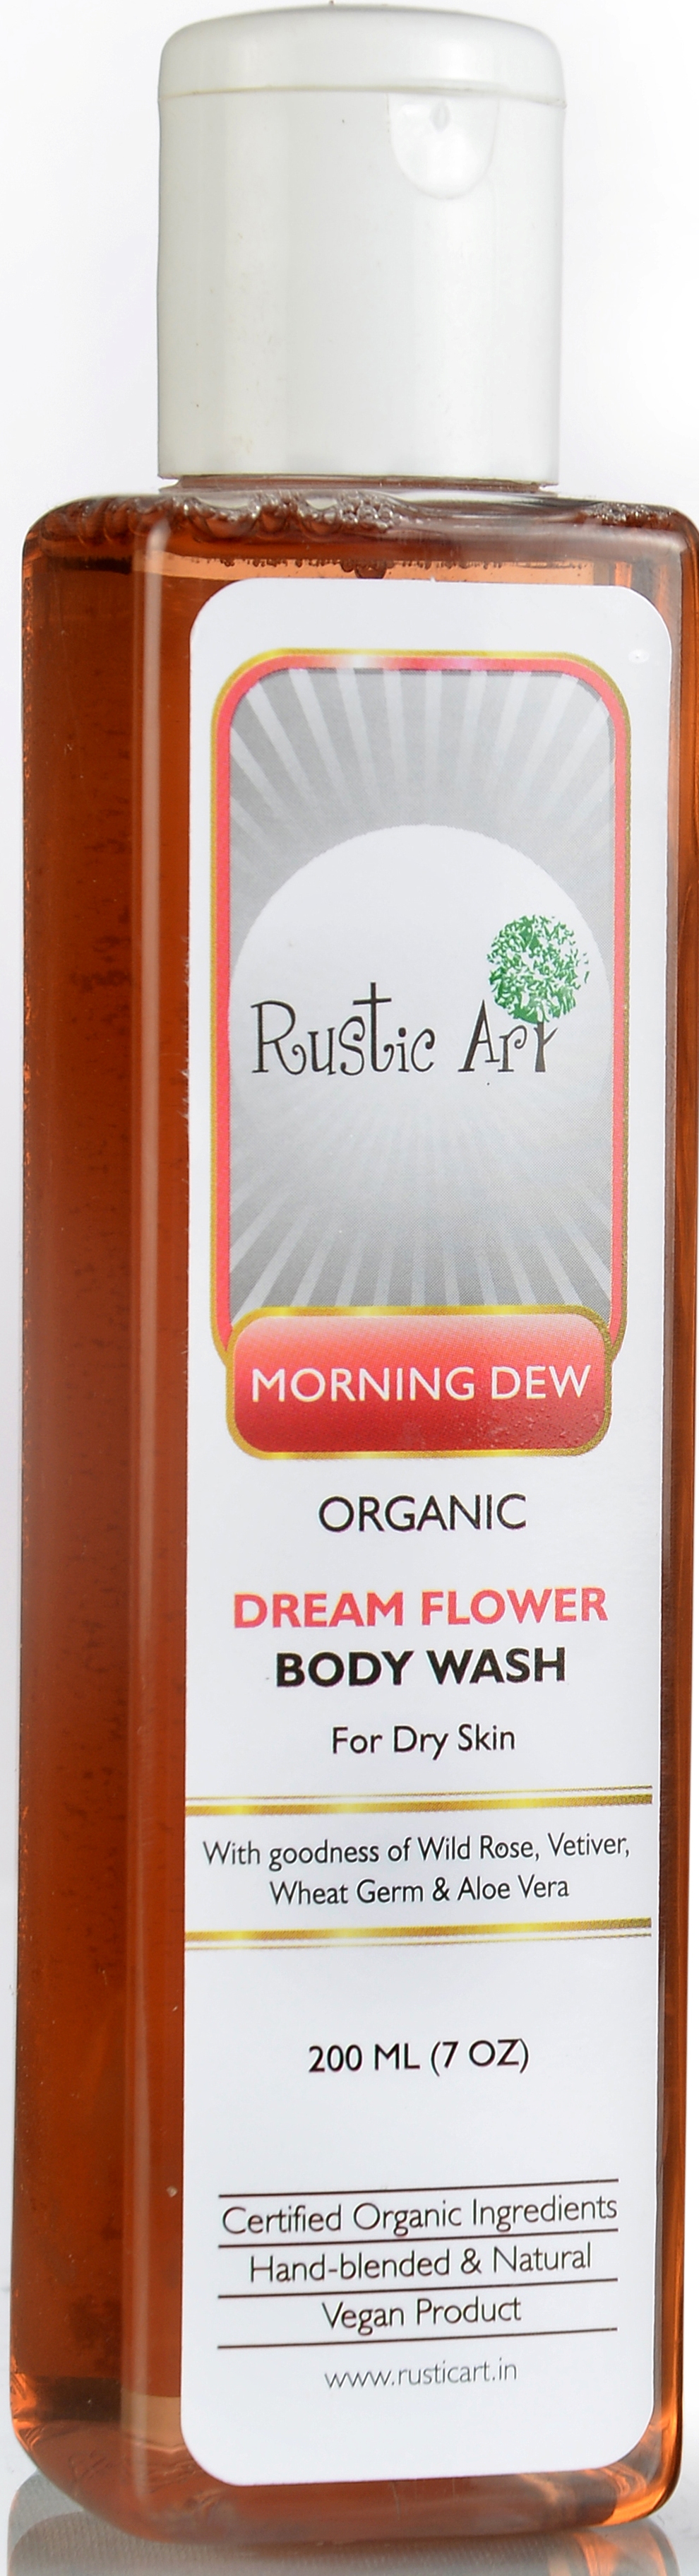 Buy Rustic Art Organic Dream Flower Body Wash at Best Price Online